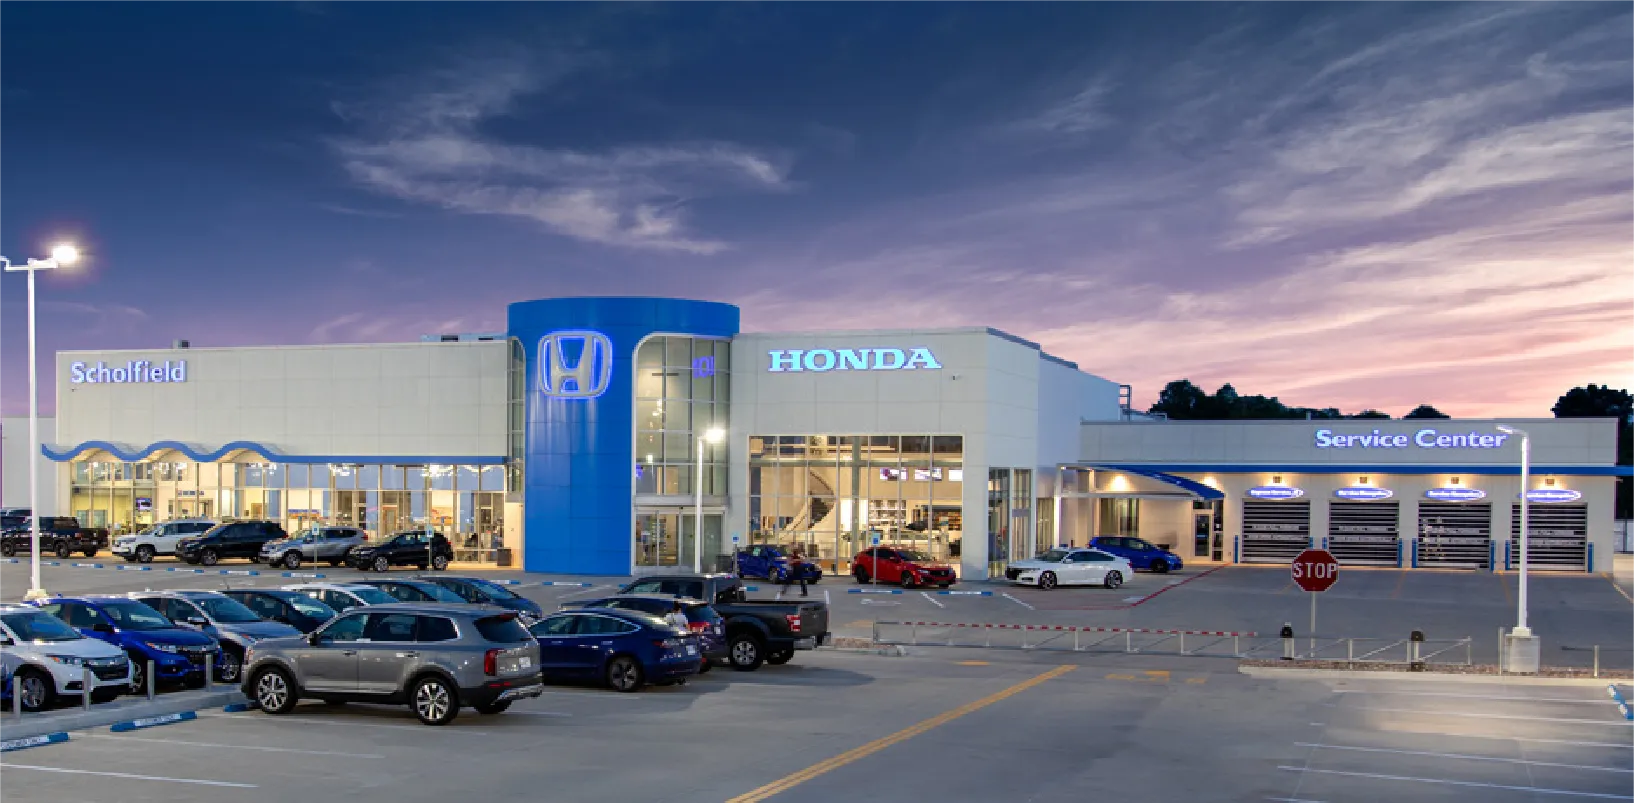 Exterior view of Scholfield Honda dealership